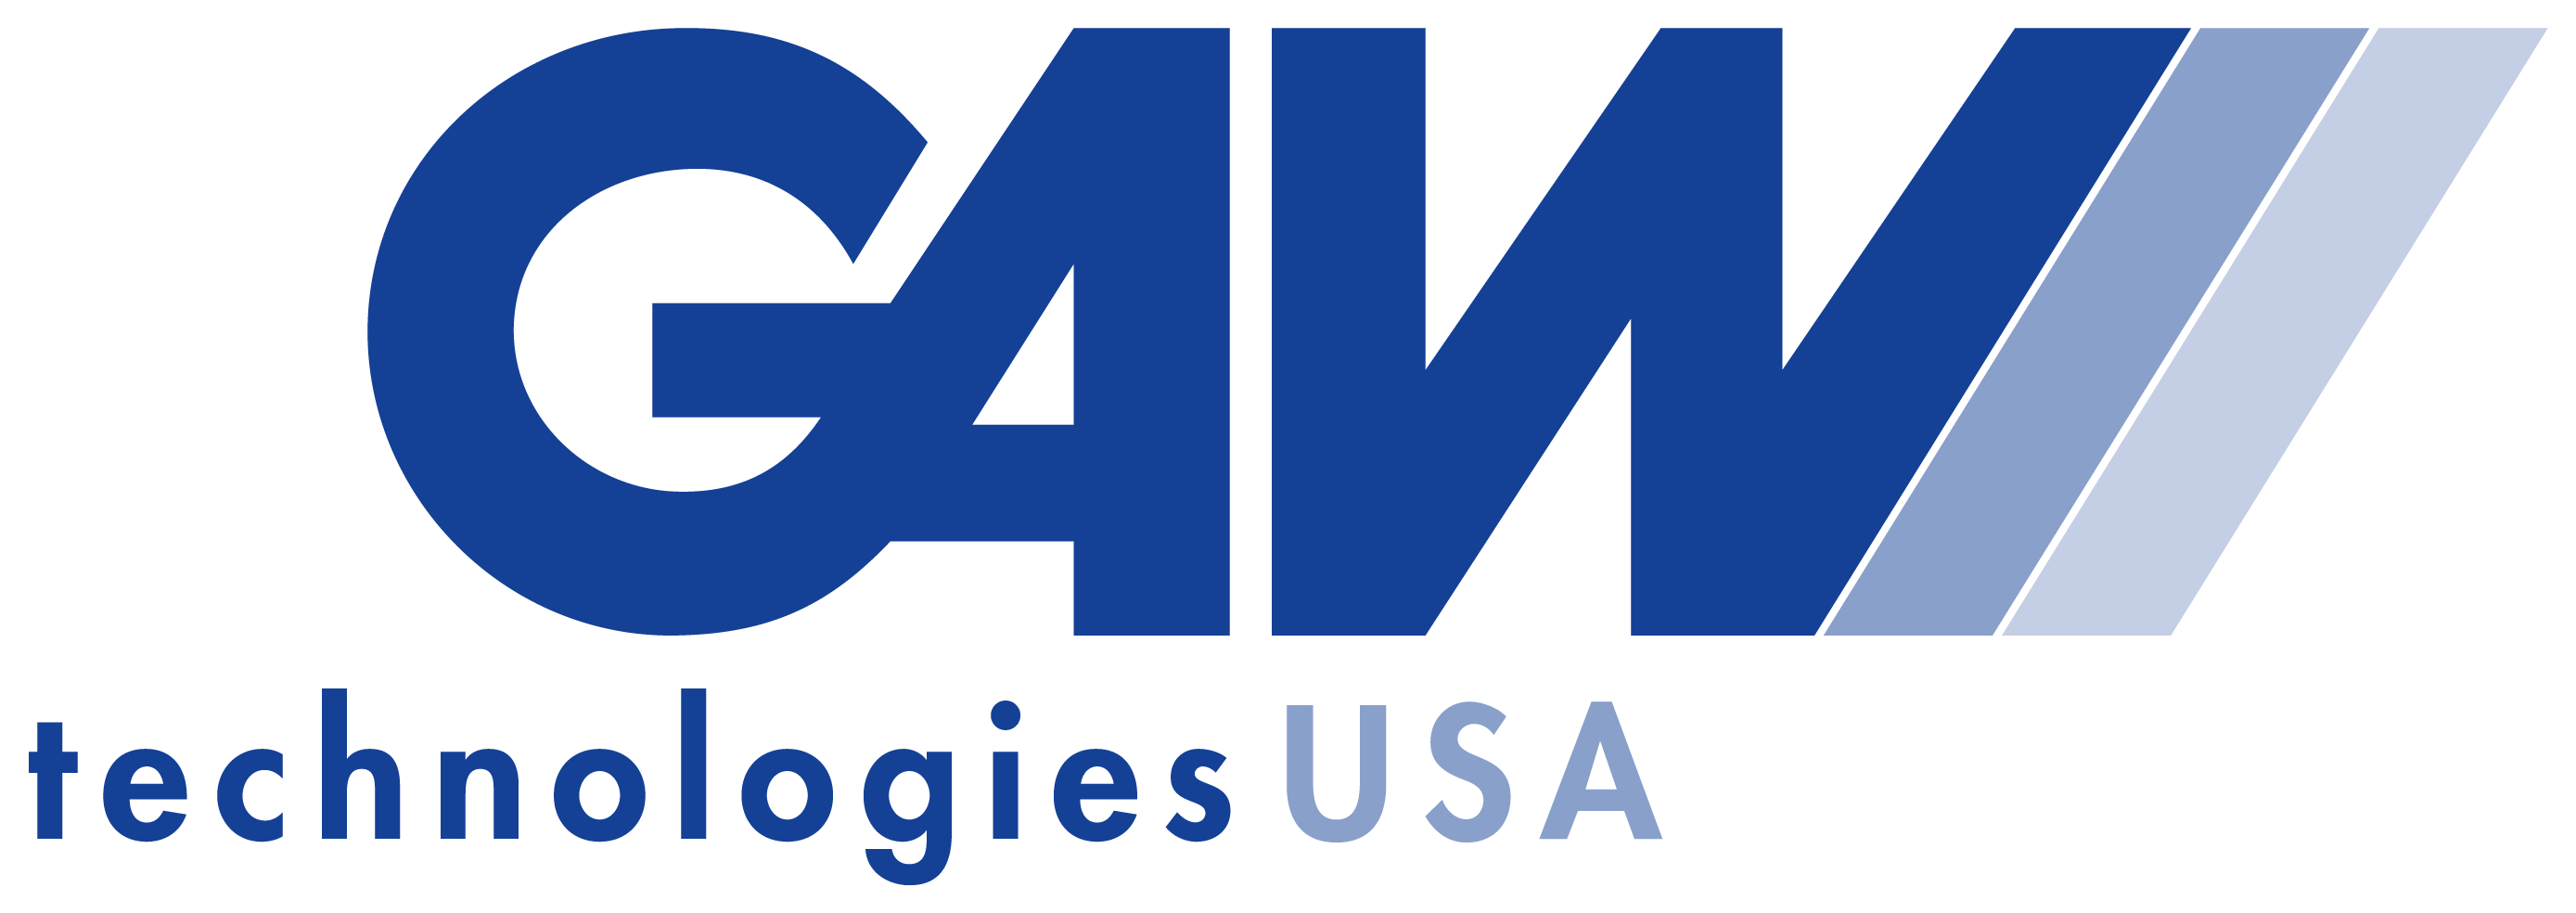 GAW Group technologies subsidiary USA Logo RGB USA